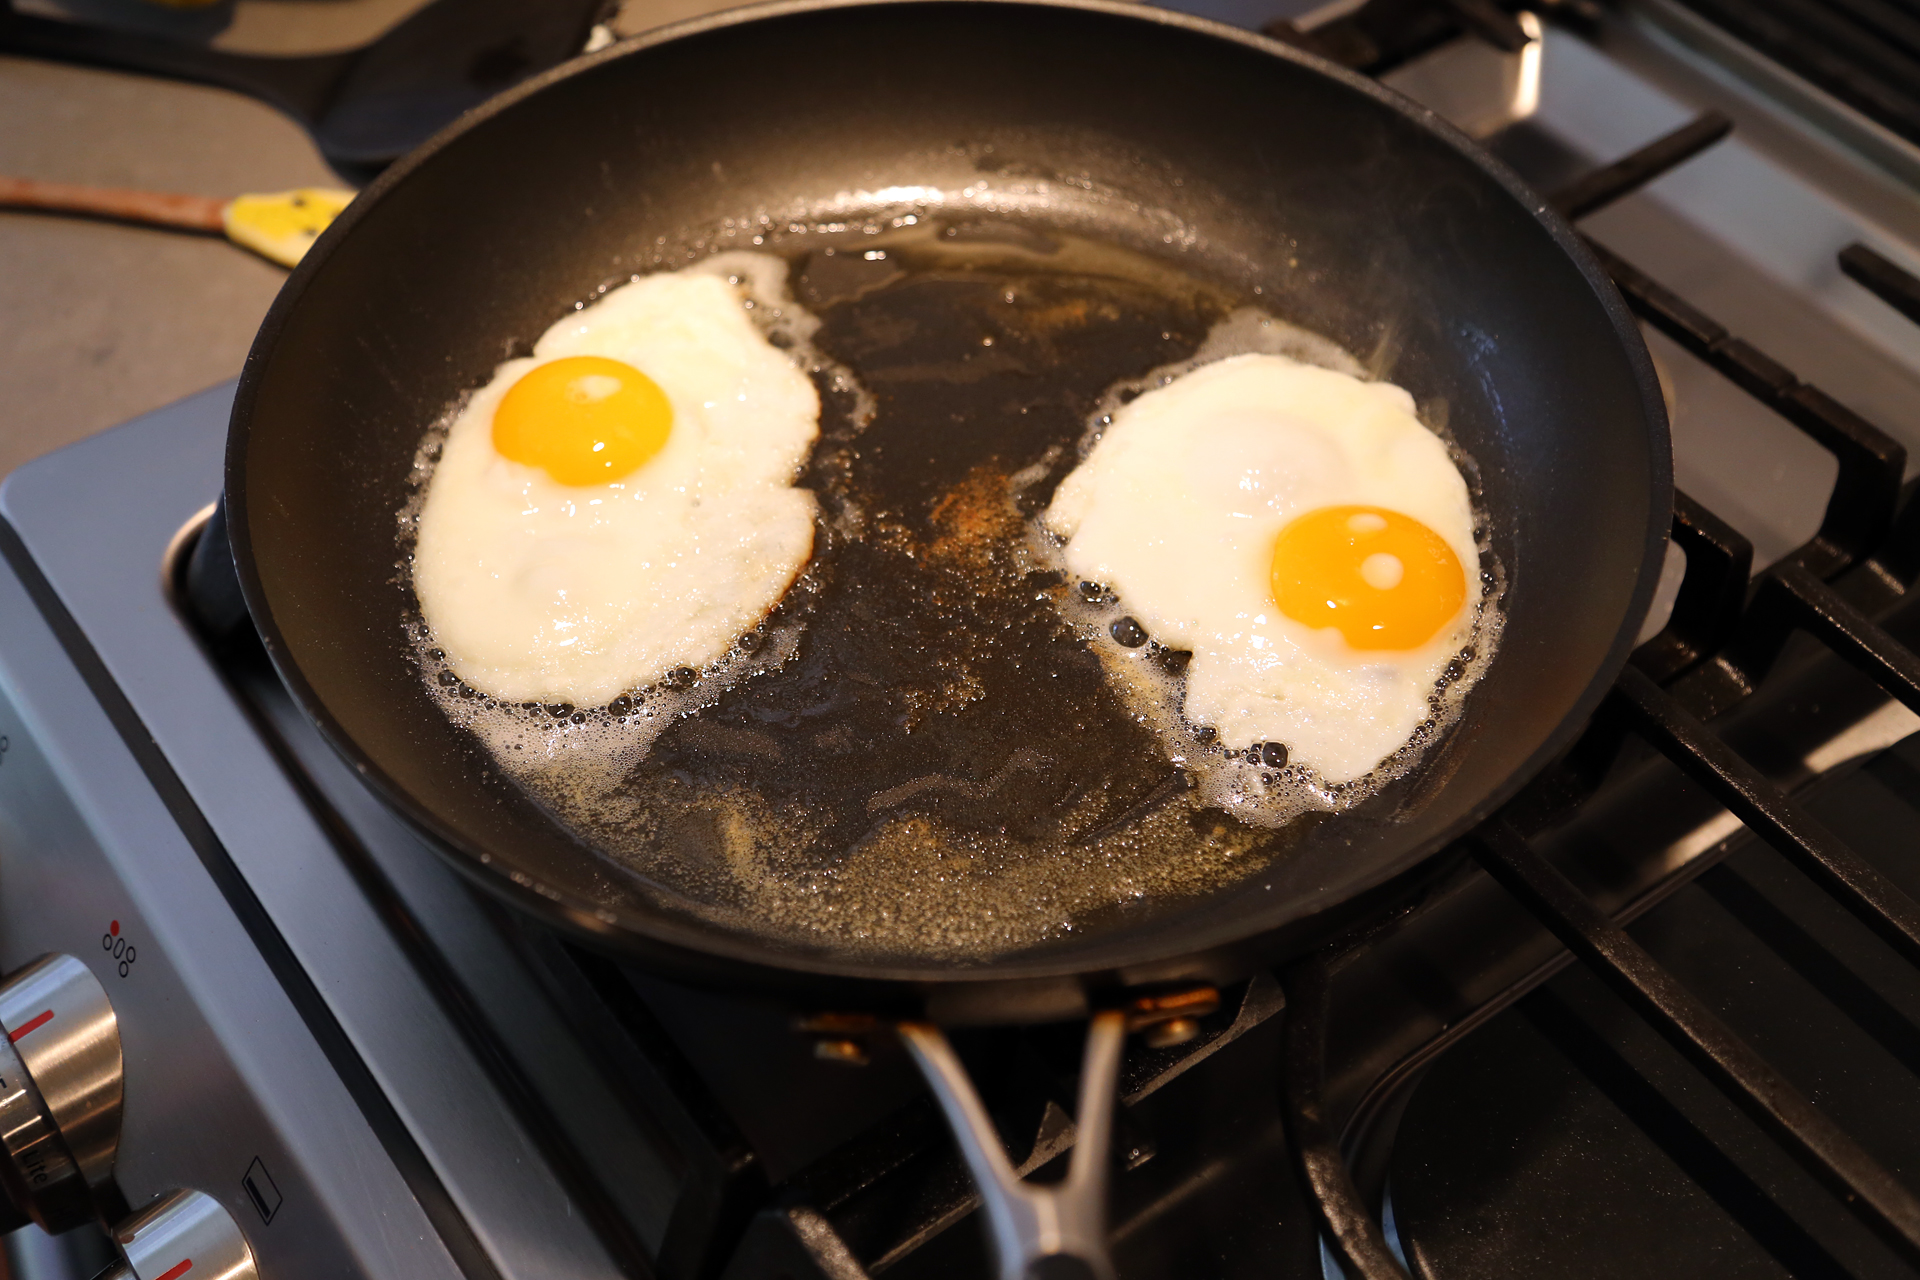 Fry the eggs to medium.